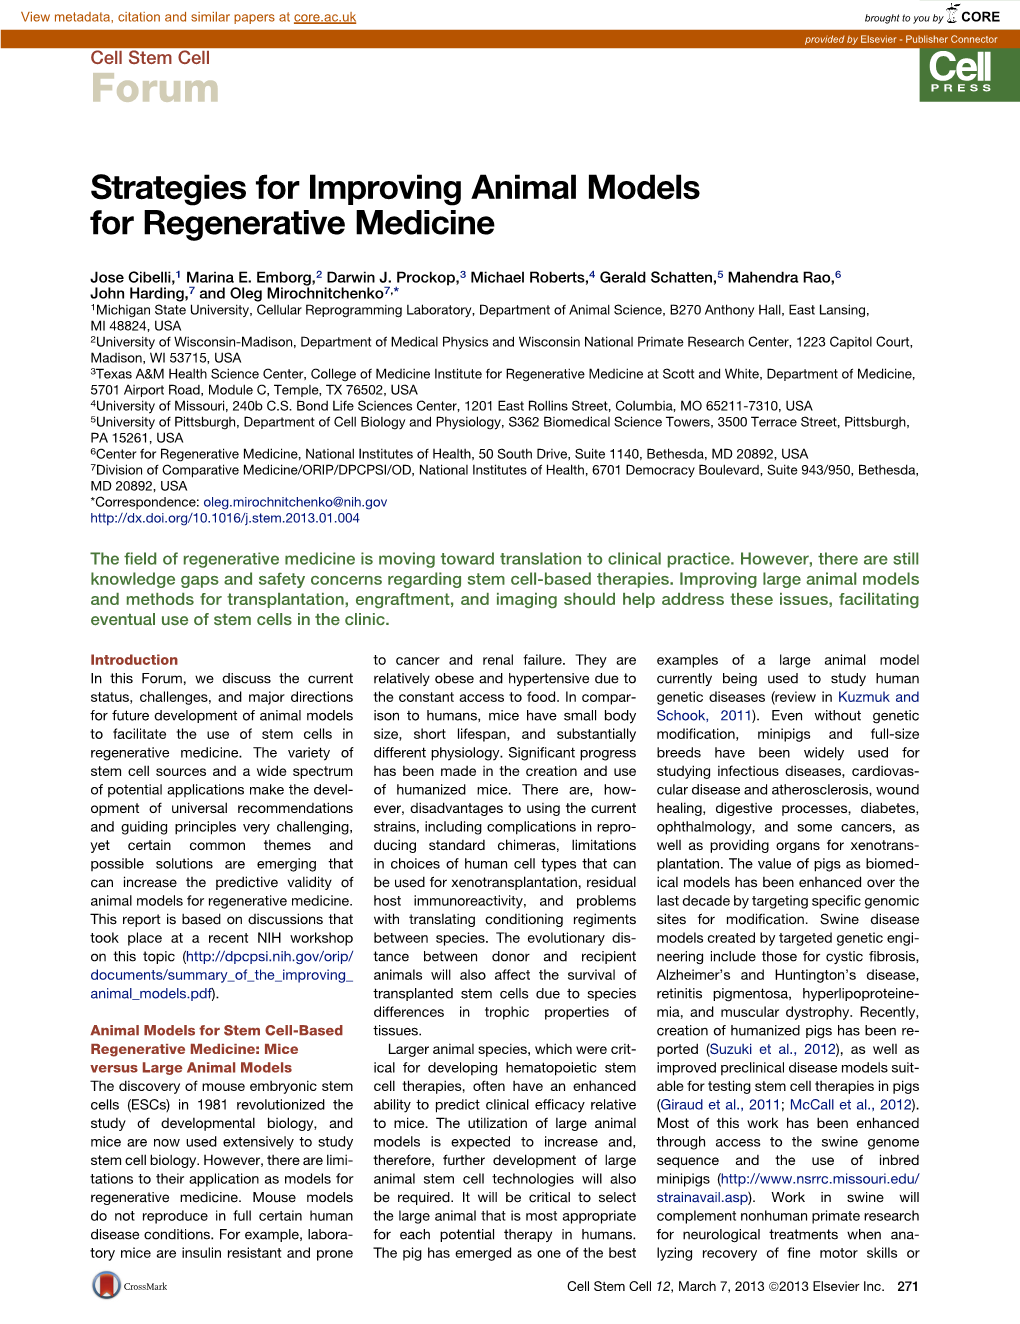 Strategies for Improving Animal Models for Regenerative Medicine